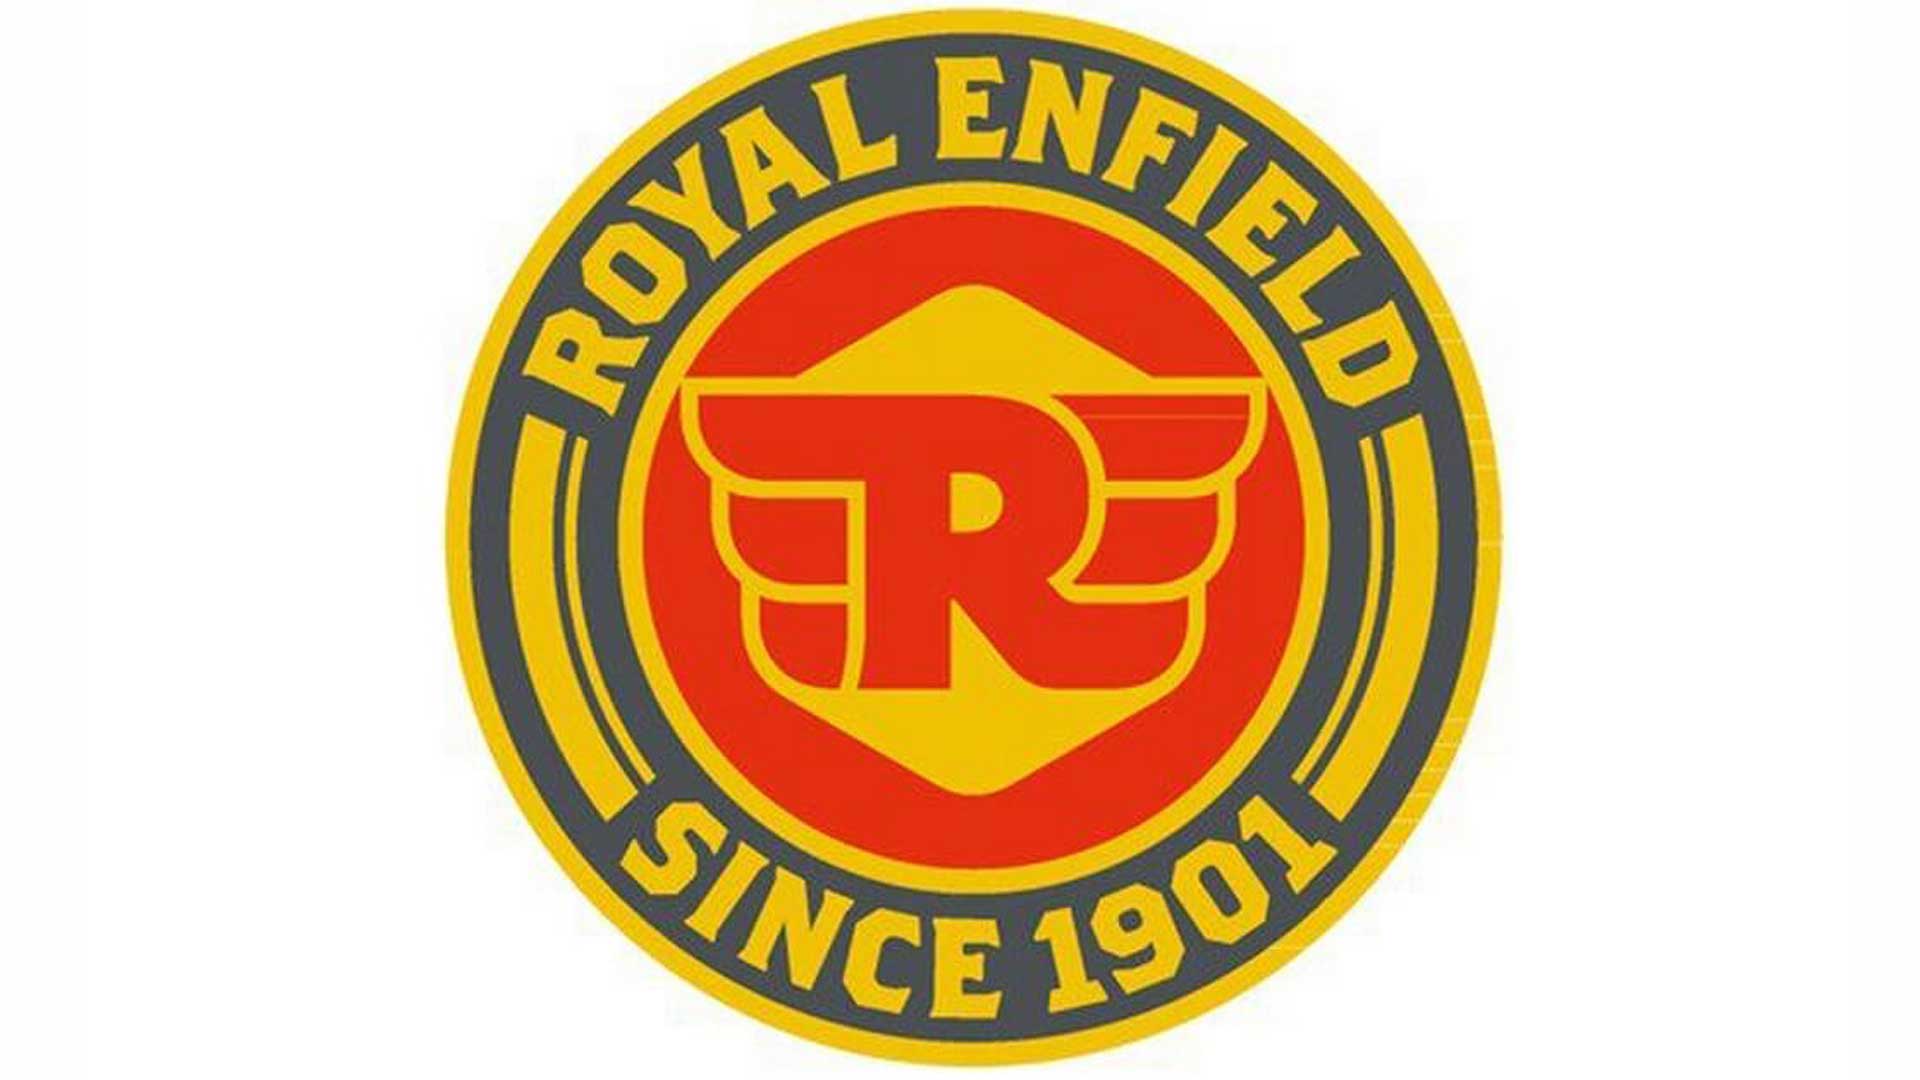 Royal Enfield Logo Hd Wallpapers 1080p - Enfield Cycle Co. Ltd , HD Wallpaper & Backgrounds